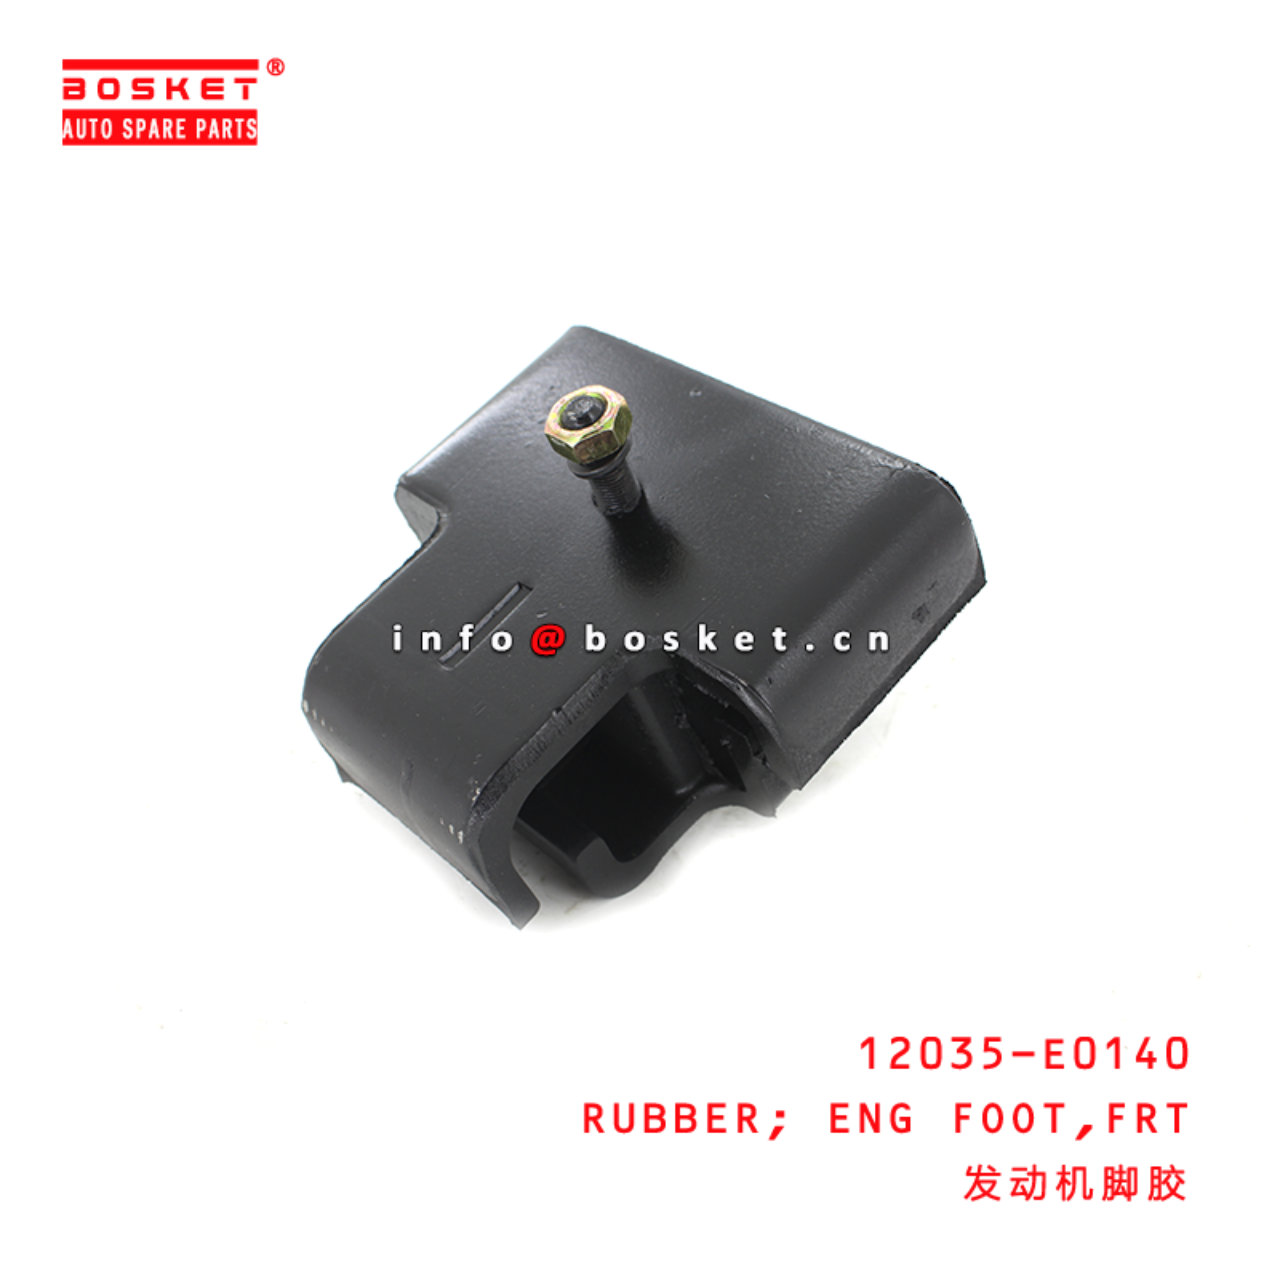 12035-E0140 Front Engine Foot Rubber Suitable for ISUZU 6HK1 